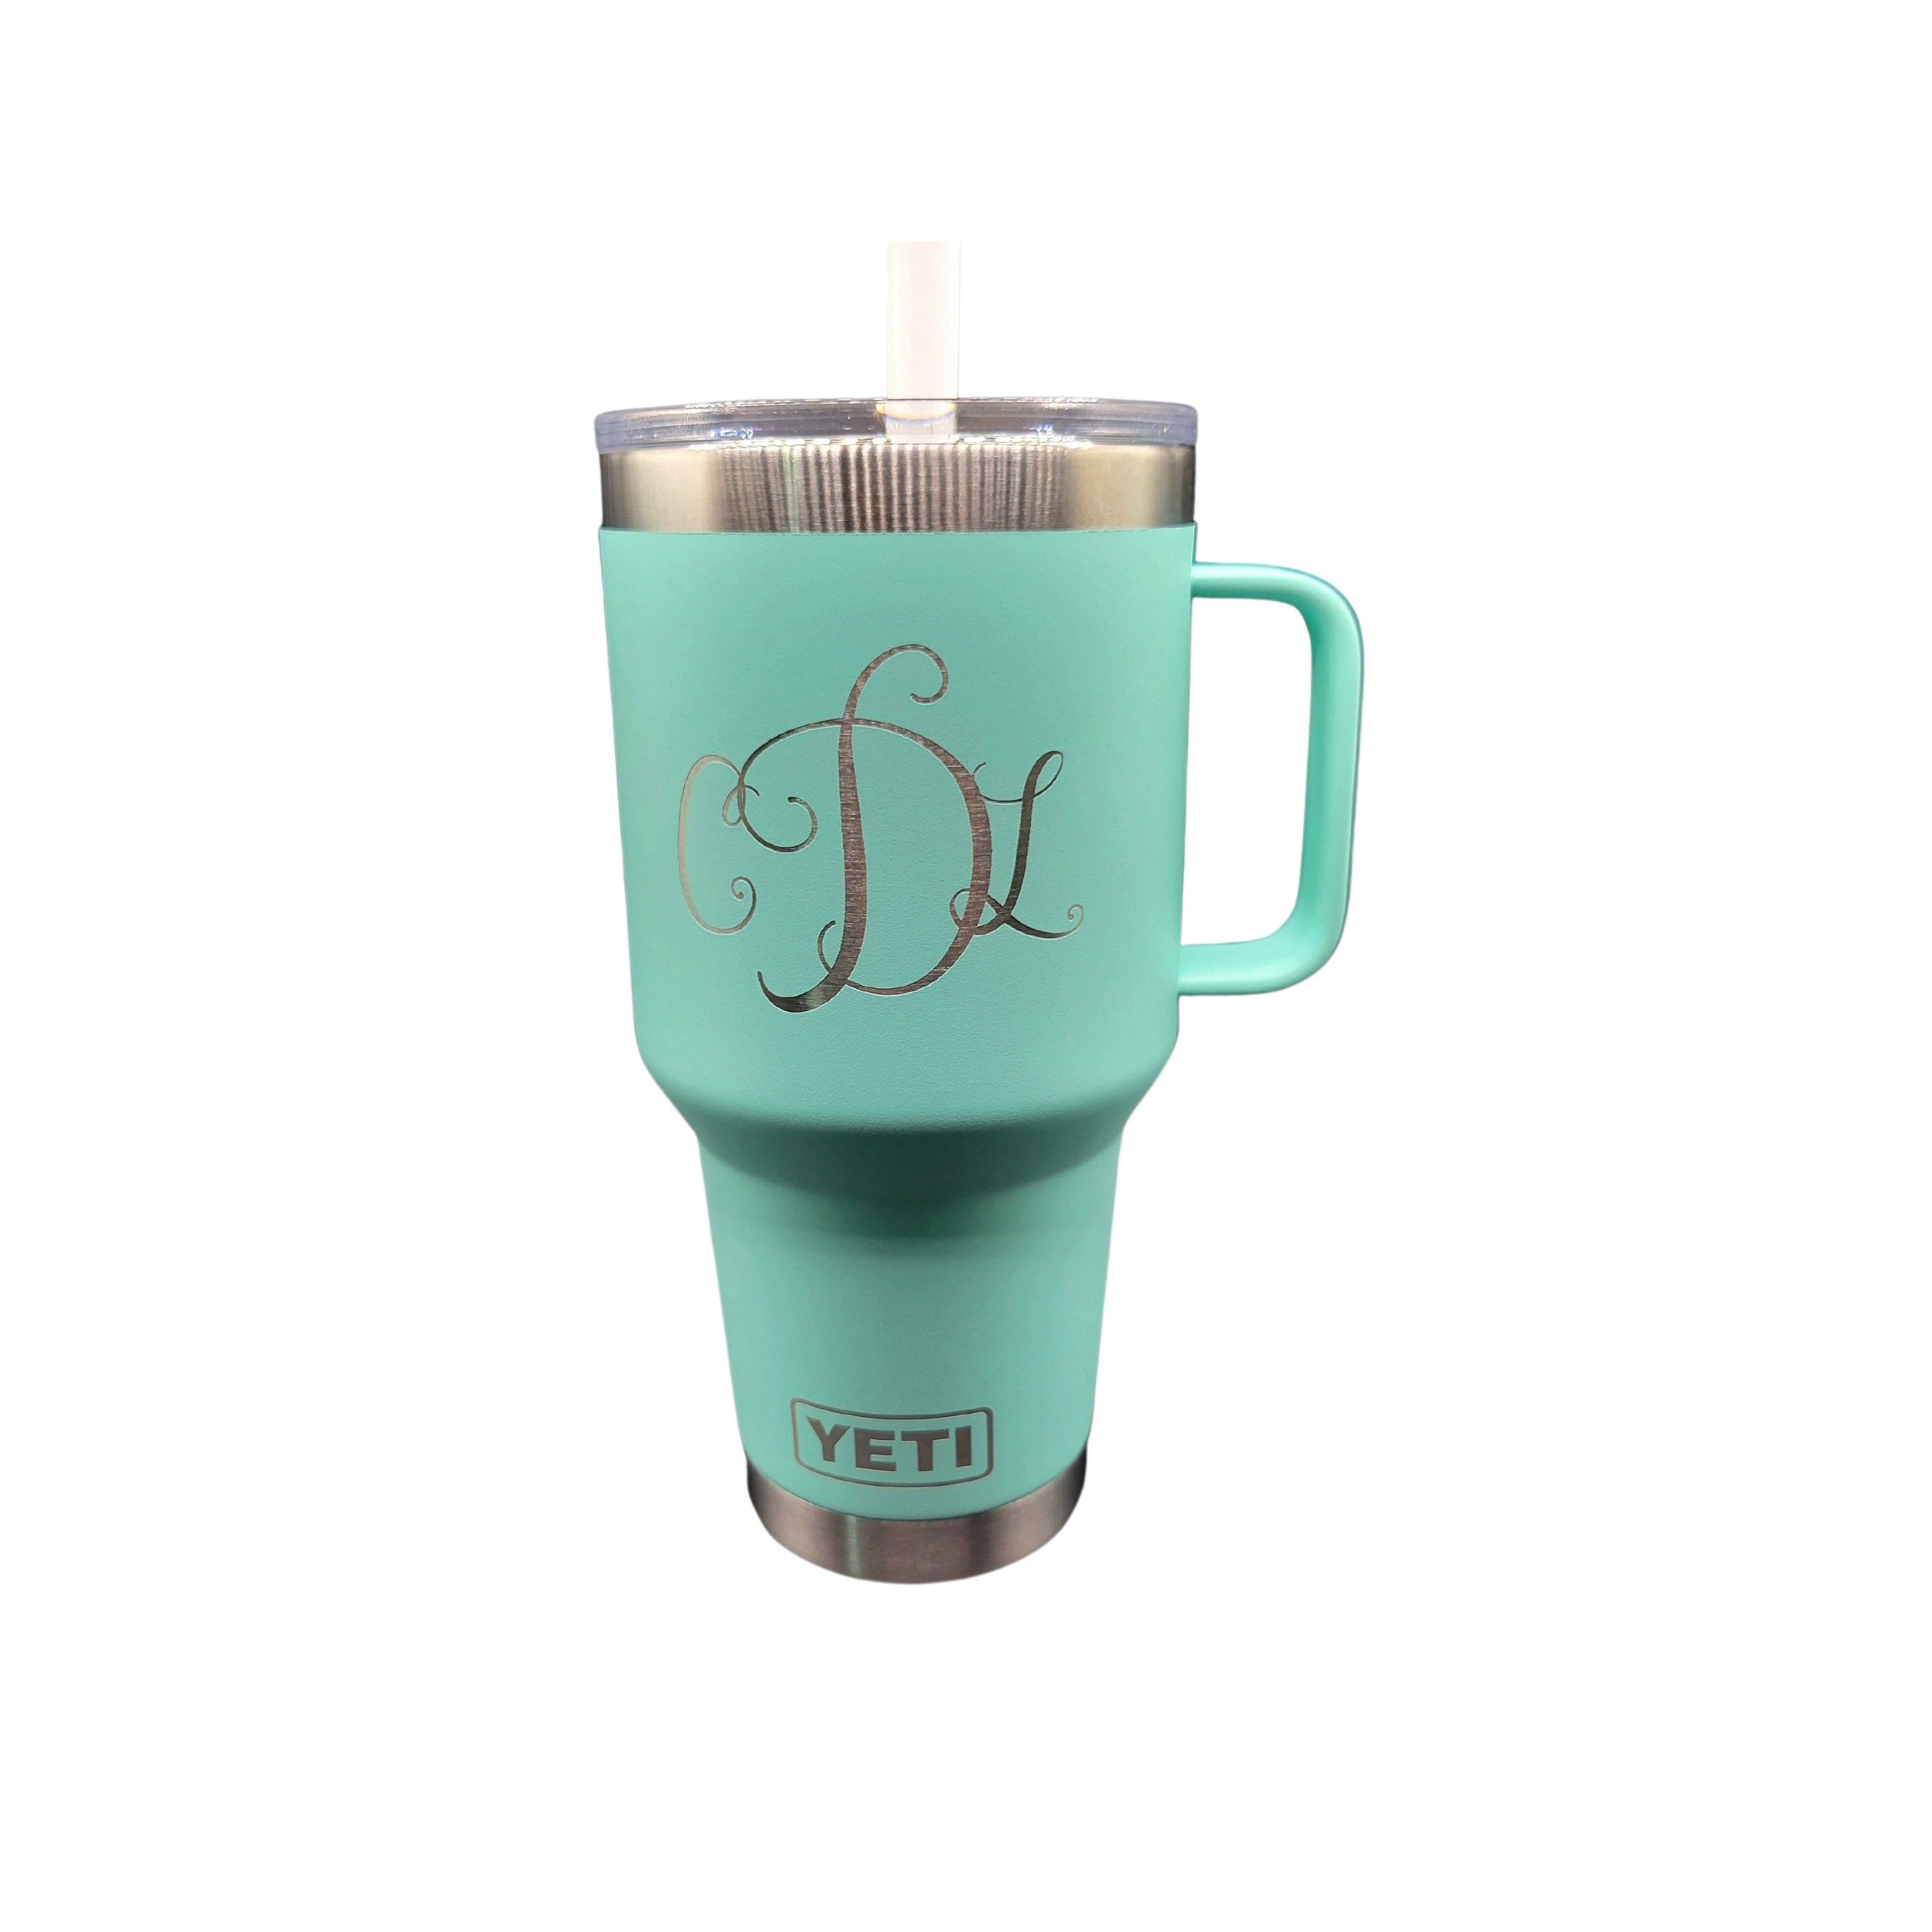 YETI Personalize 35oz Mug With Handle and Straw Lid Custom 35 Oz